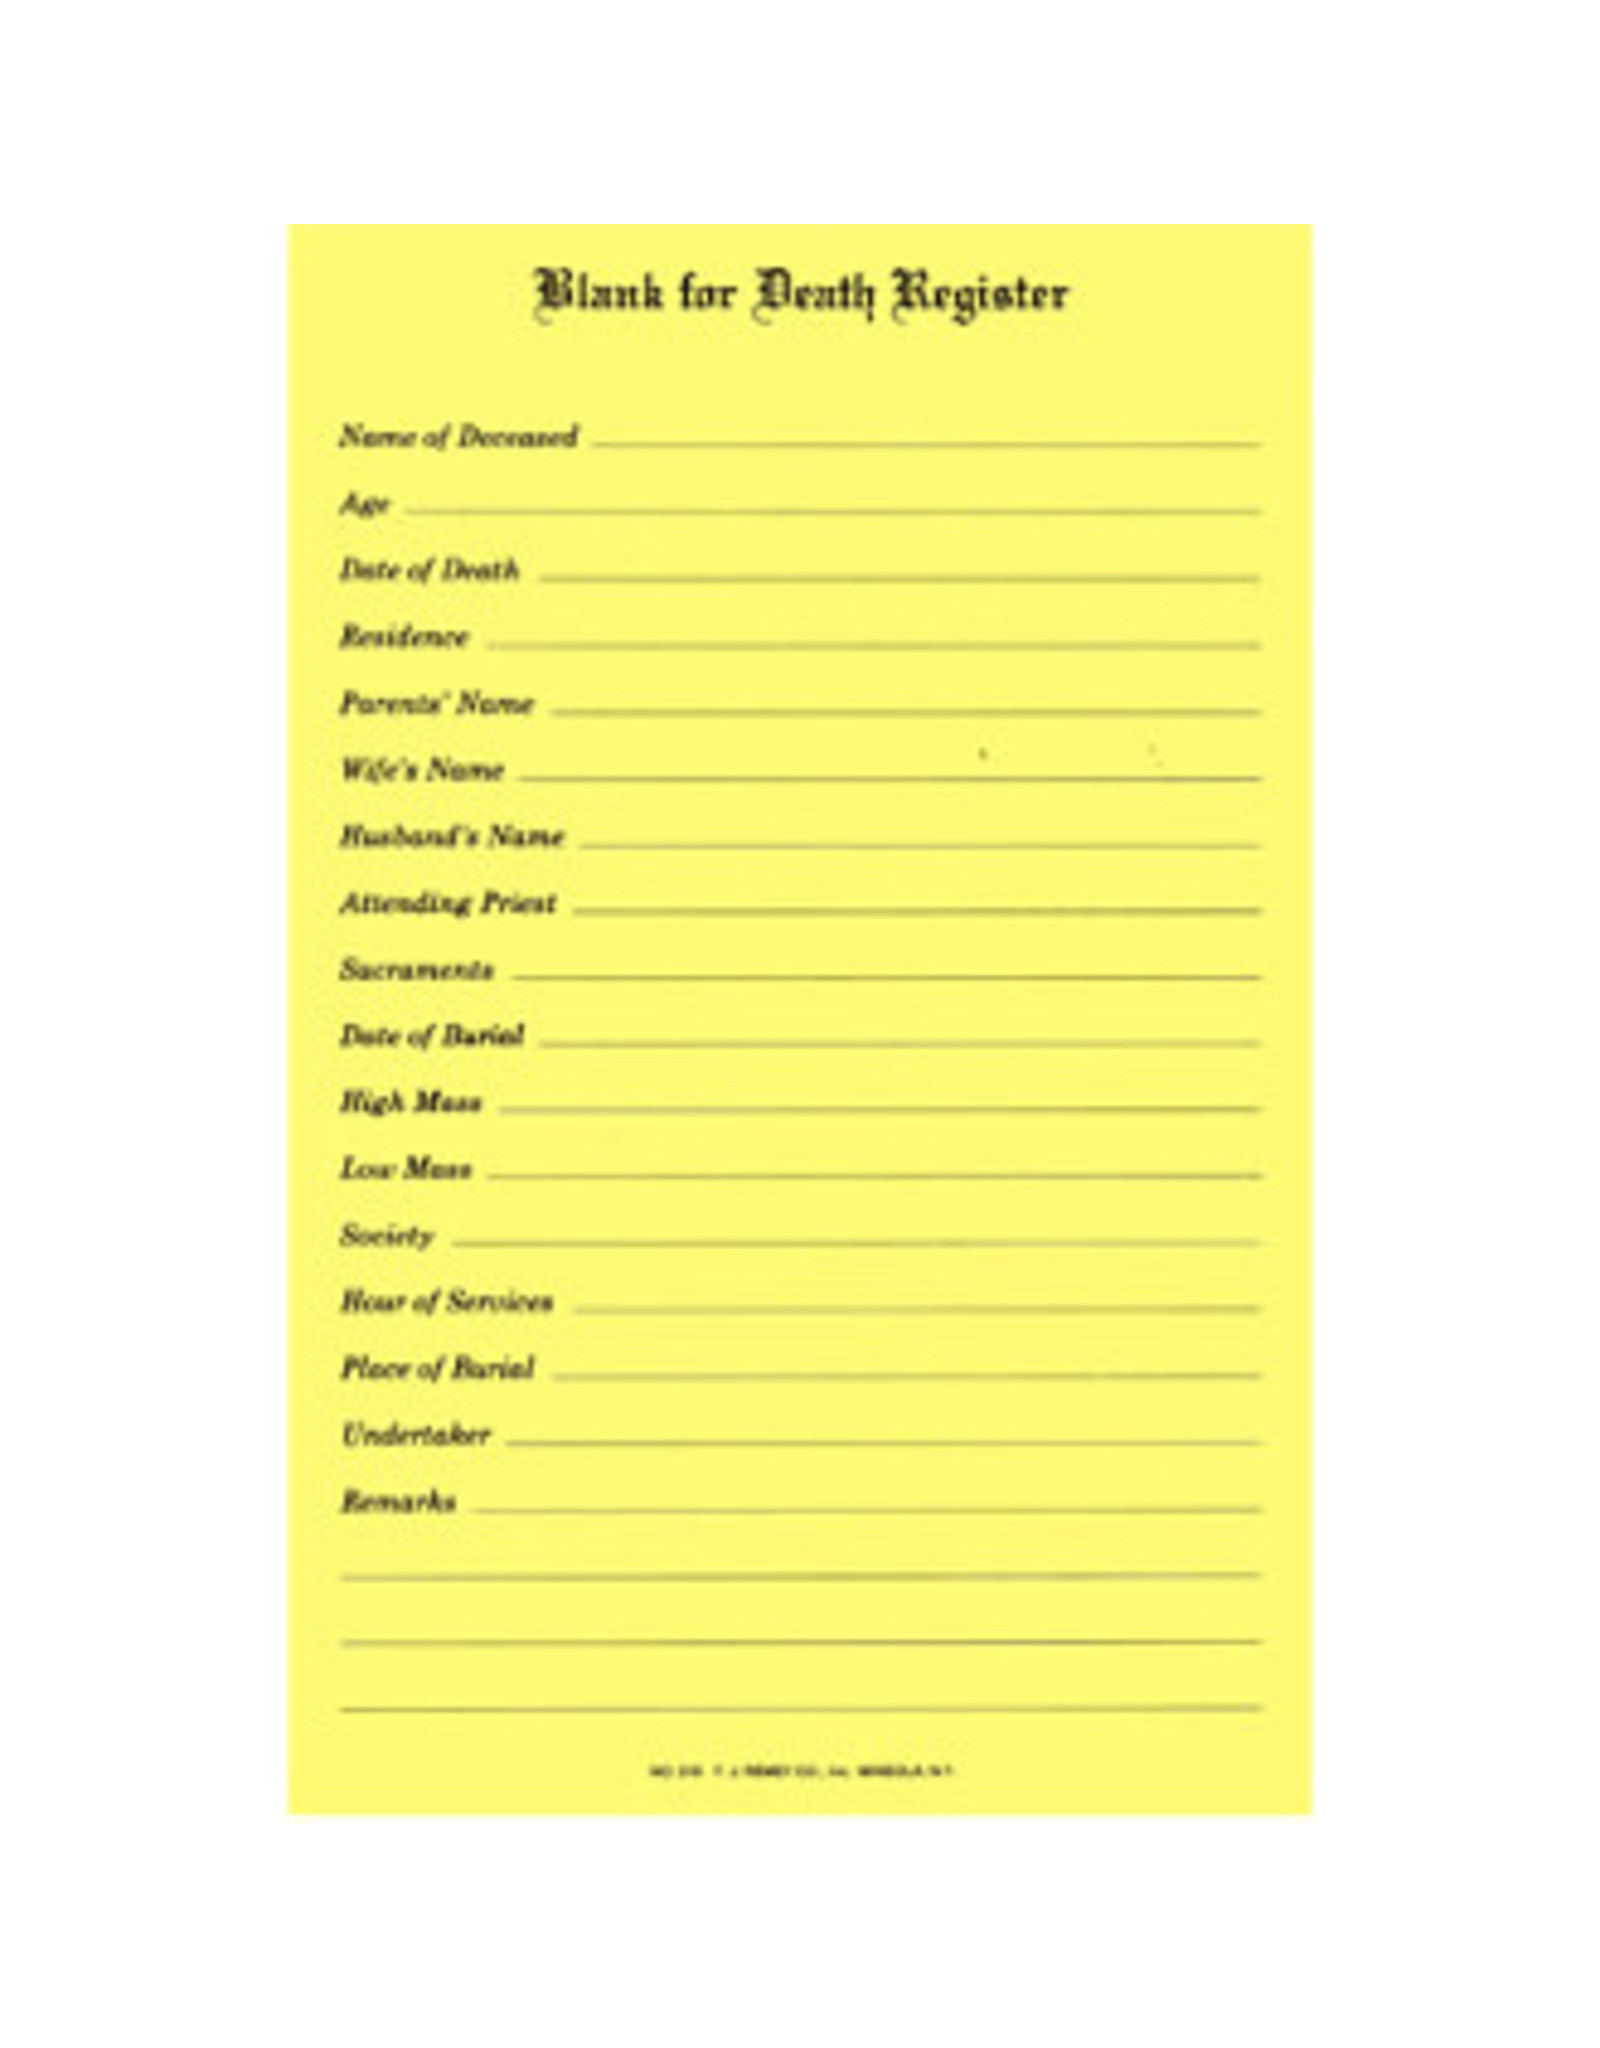 Remey, F.J. Death Register Blanks (Pad of 50)